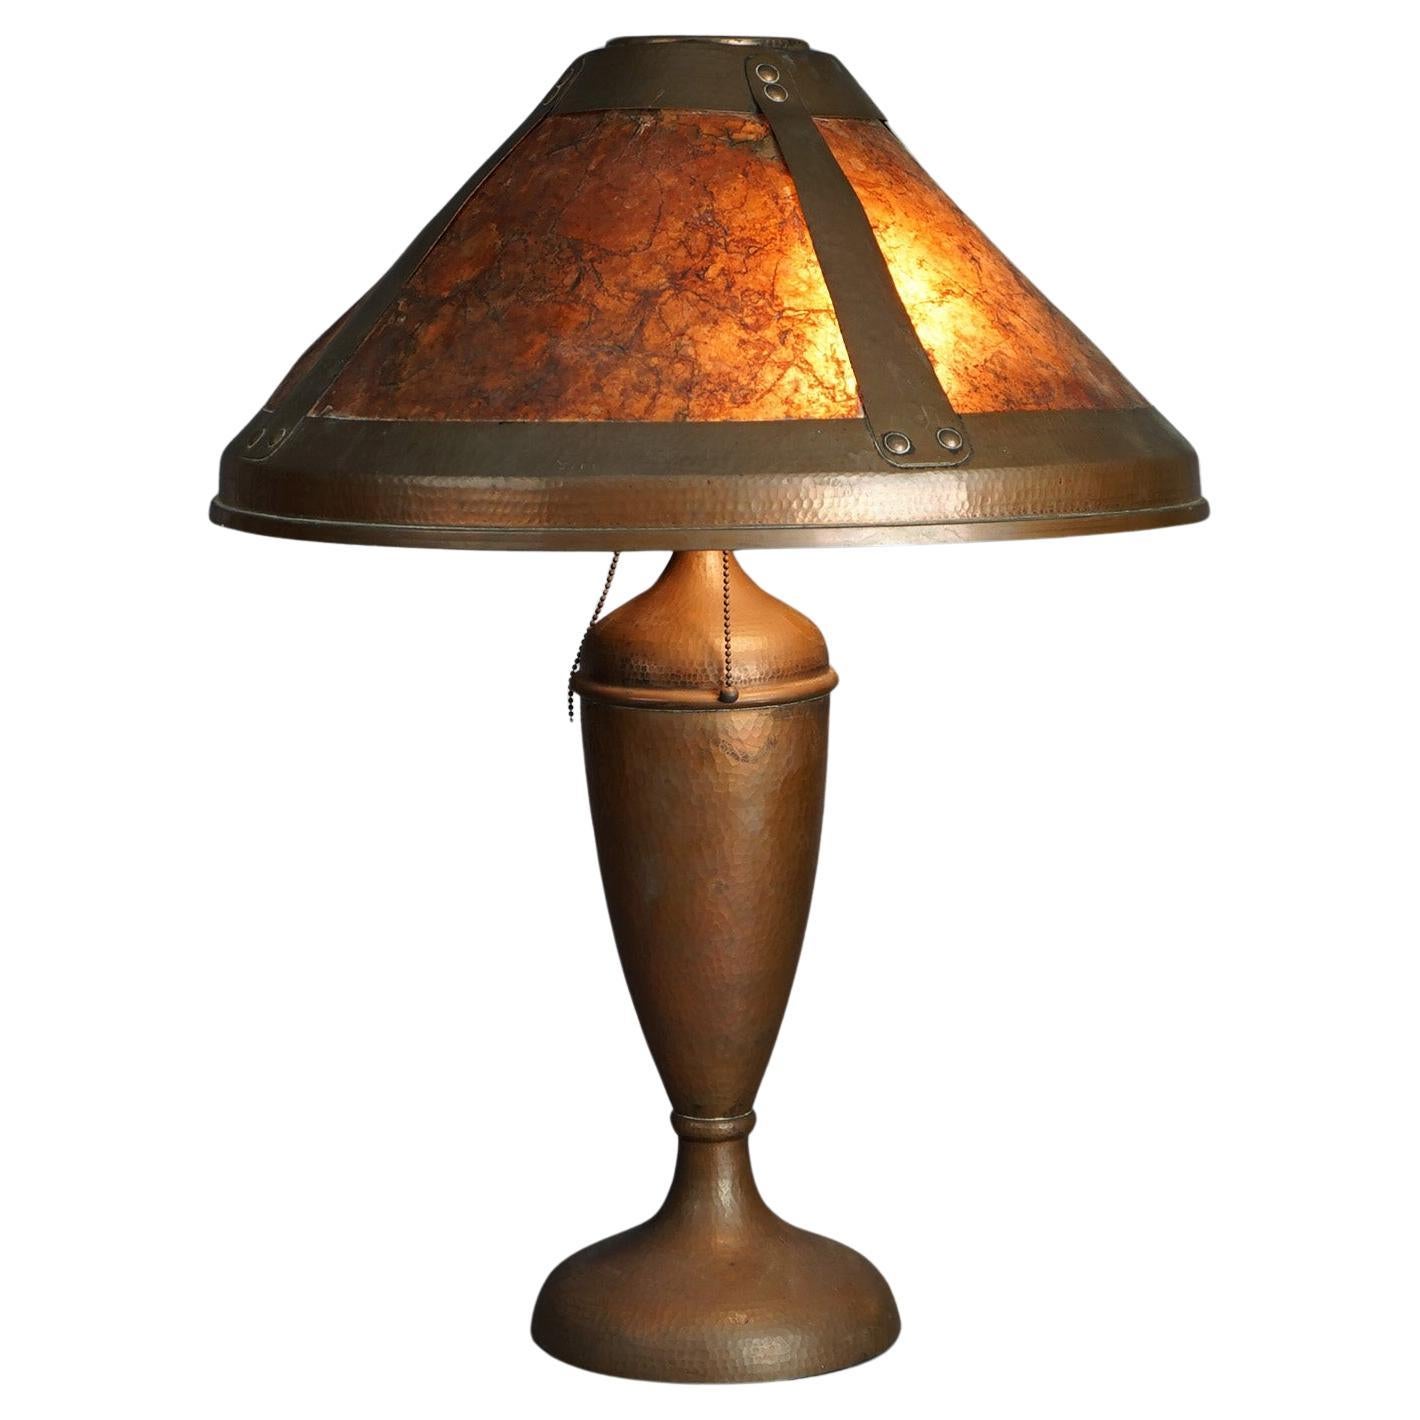 Antique Dirk Van Erp Benedict Studios Hammered Copper Lamp w/ Mica Inserts c1910